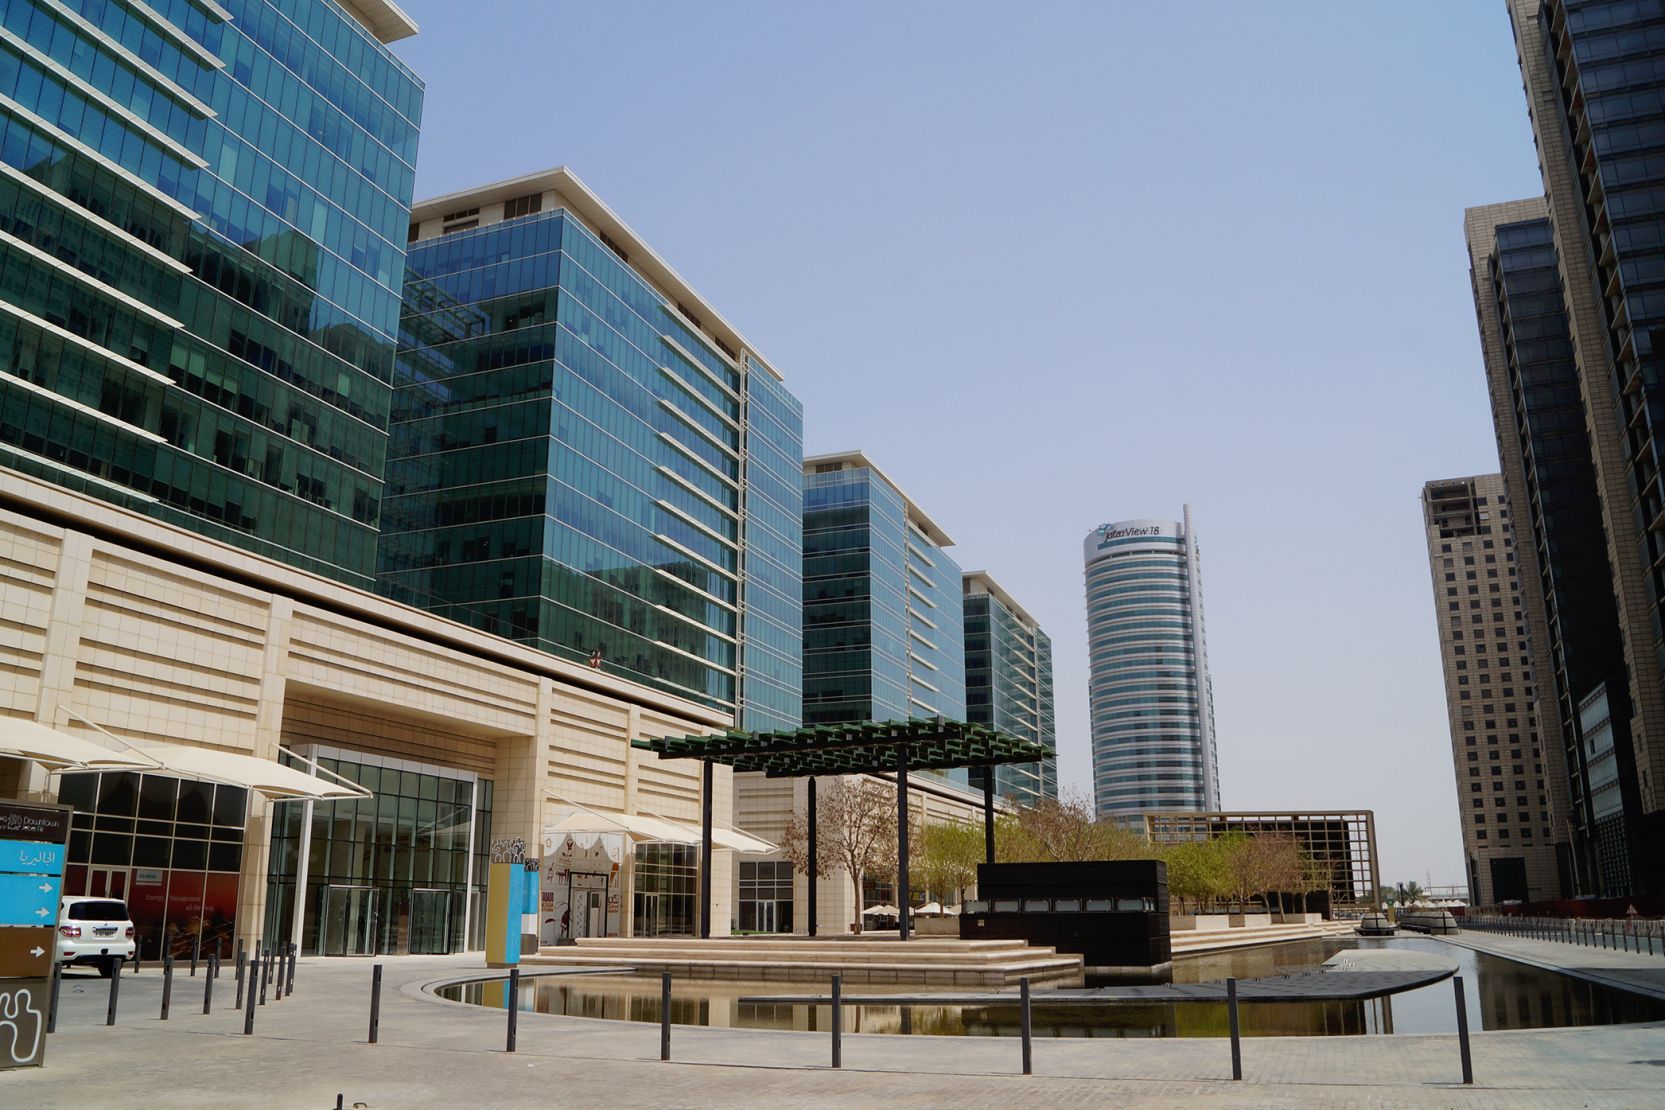 Downtown Jebel Ali